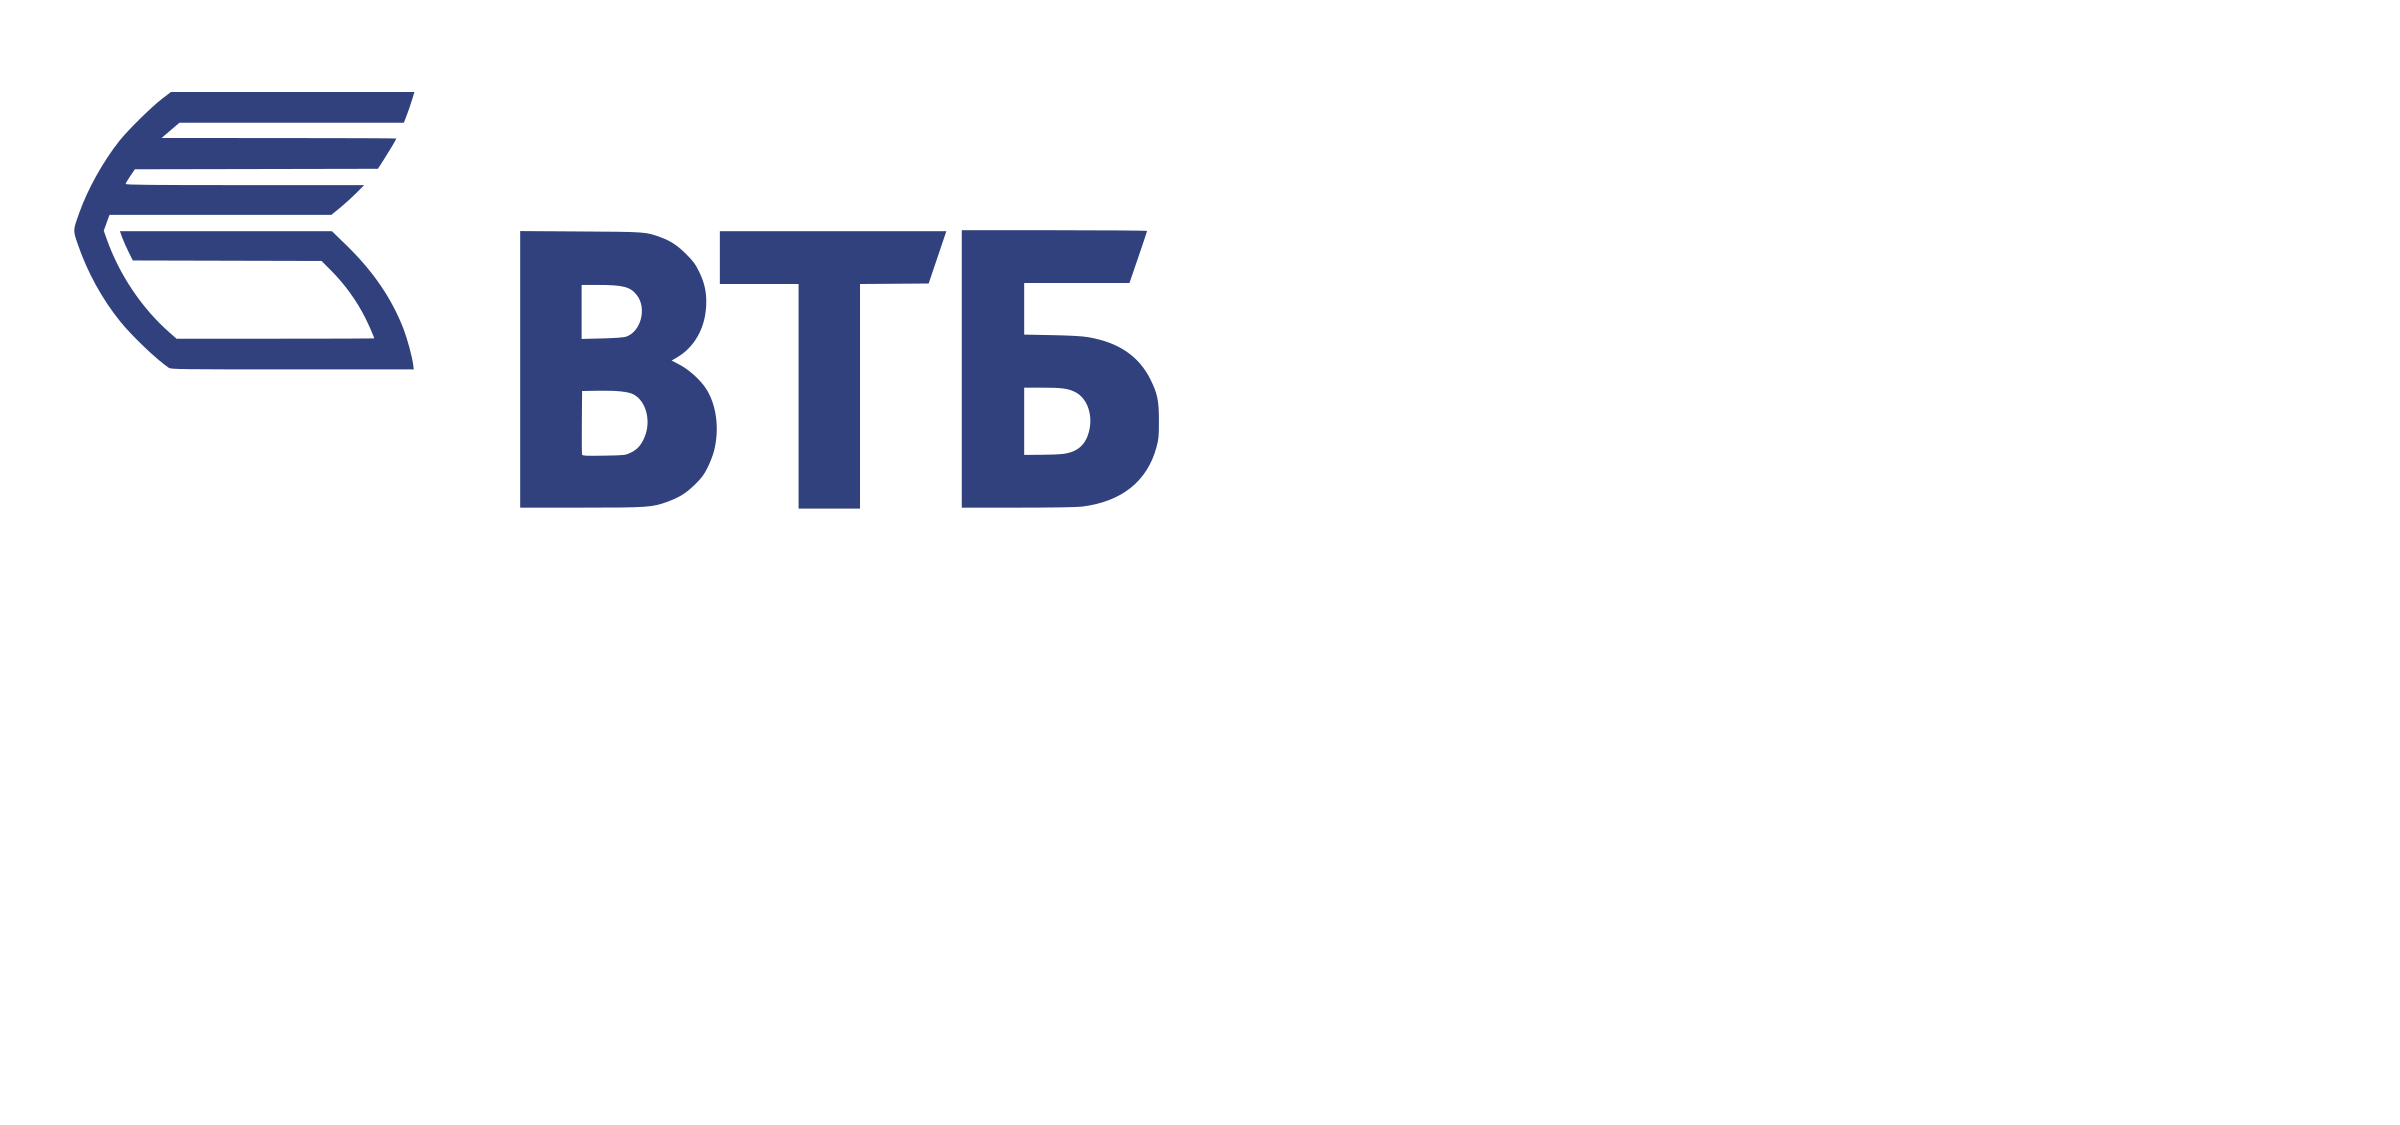 ВТБ логотип на прозрачном фоне. ВТБ банк логотип без фона. ВТБ логотип PNG прозрачный фон. Логотип ВТБ банка новый прозрачный. Vtb r s